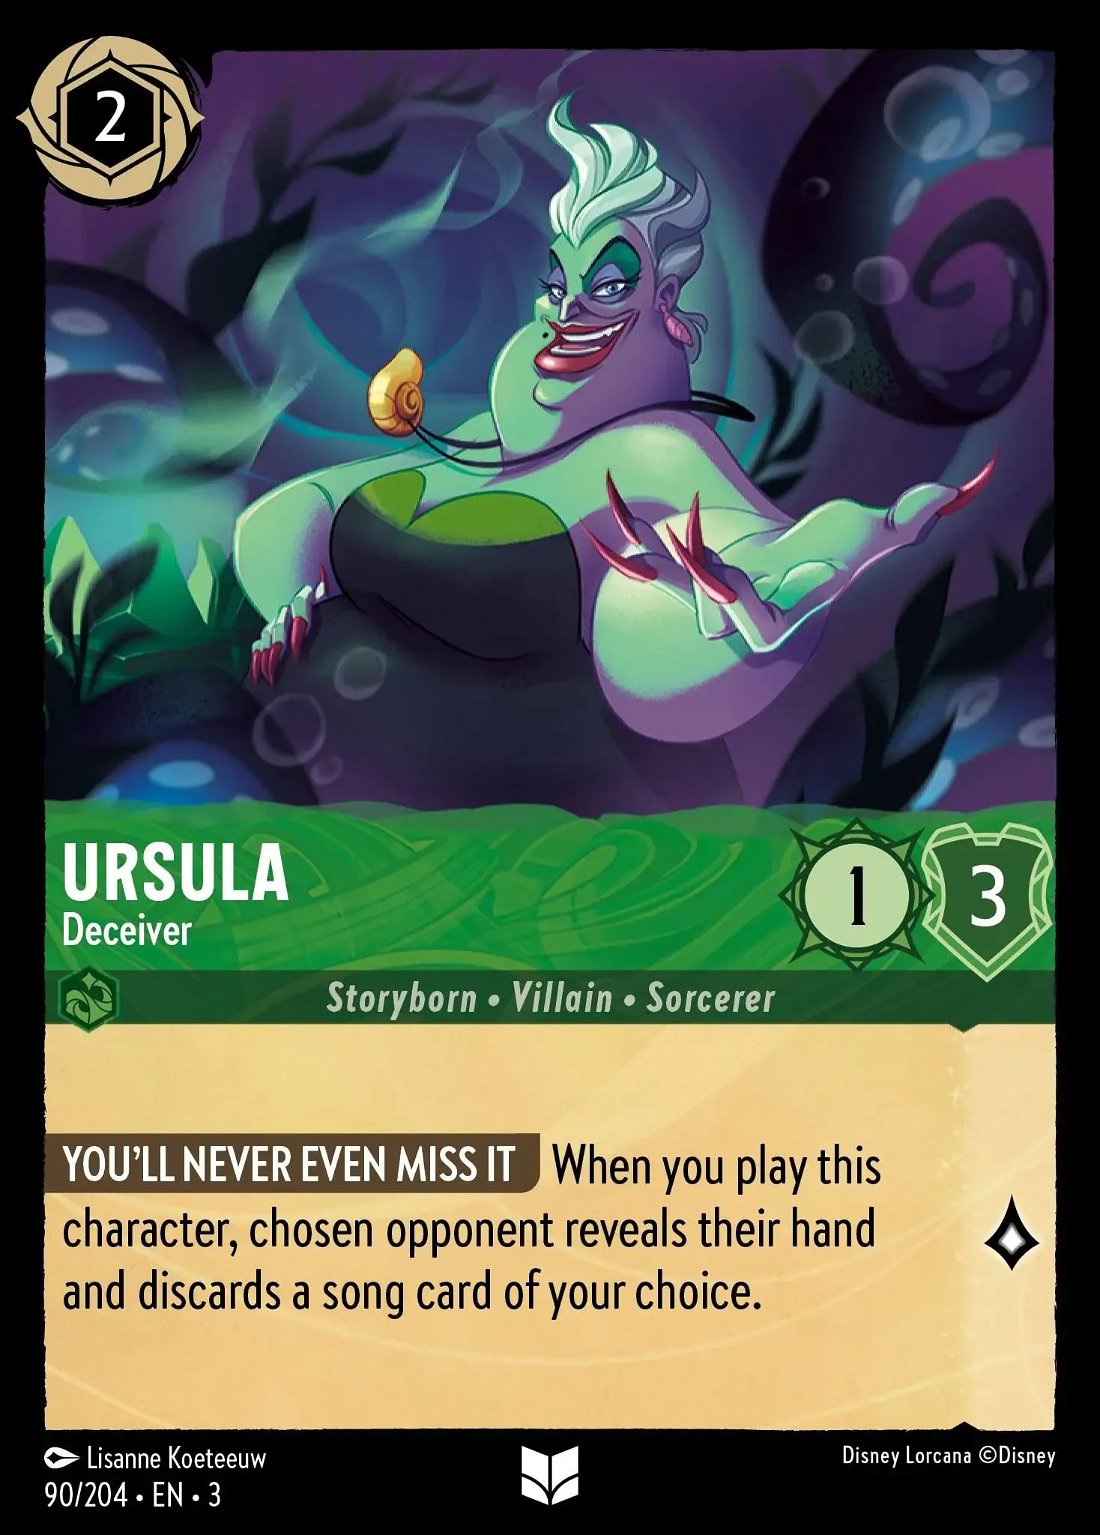 Ursula - Deceiver Crop image Wallpaper